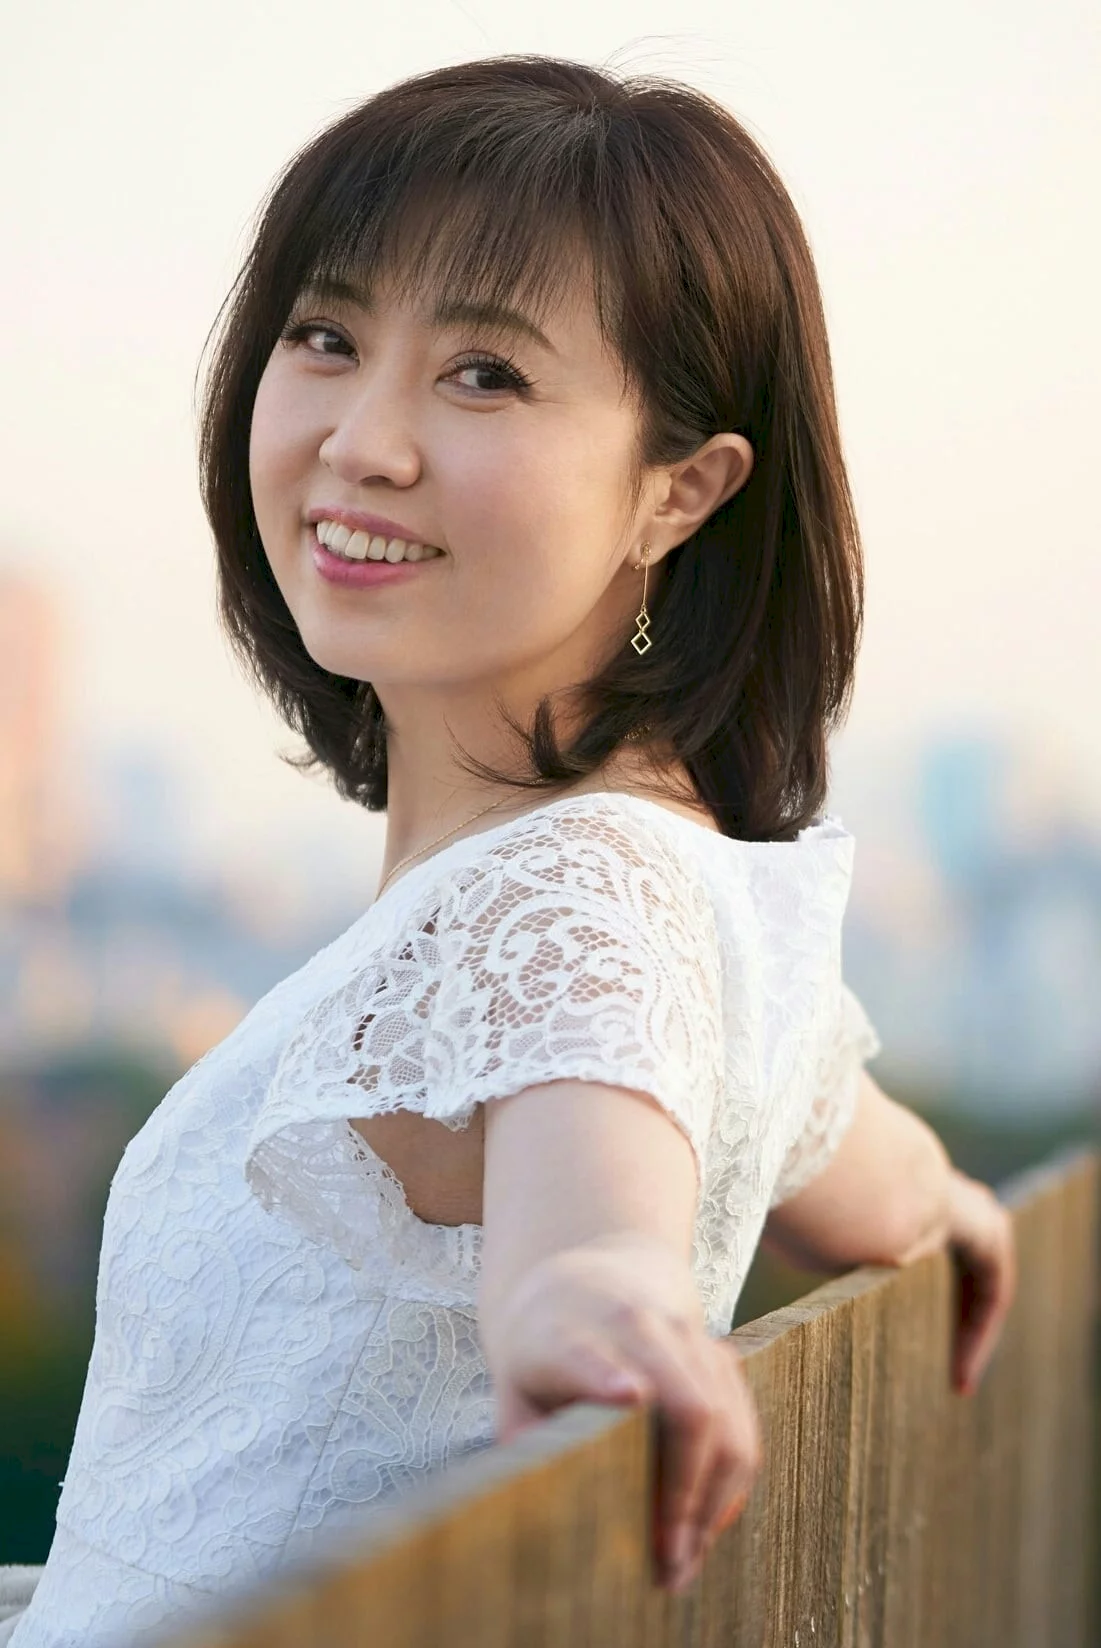  Megumi Hayashibara